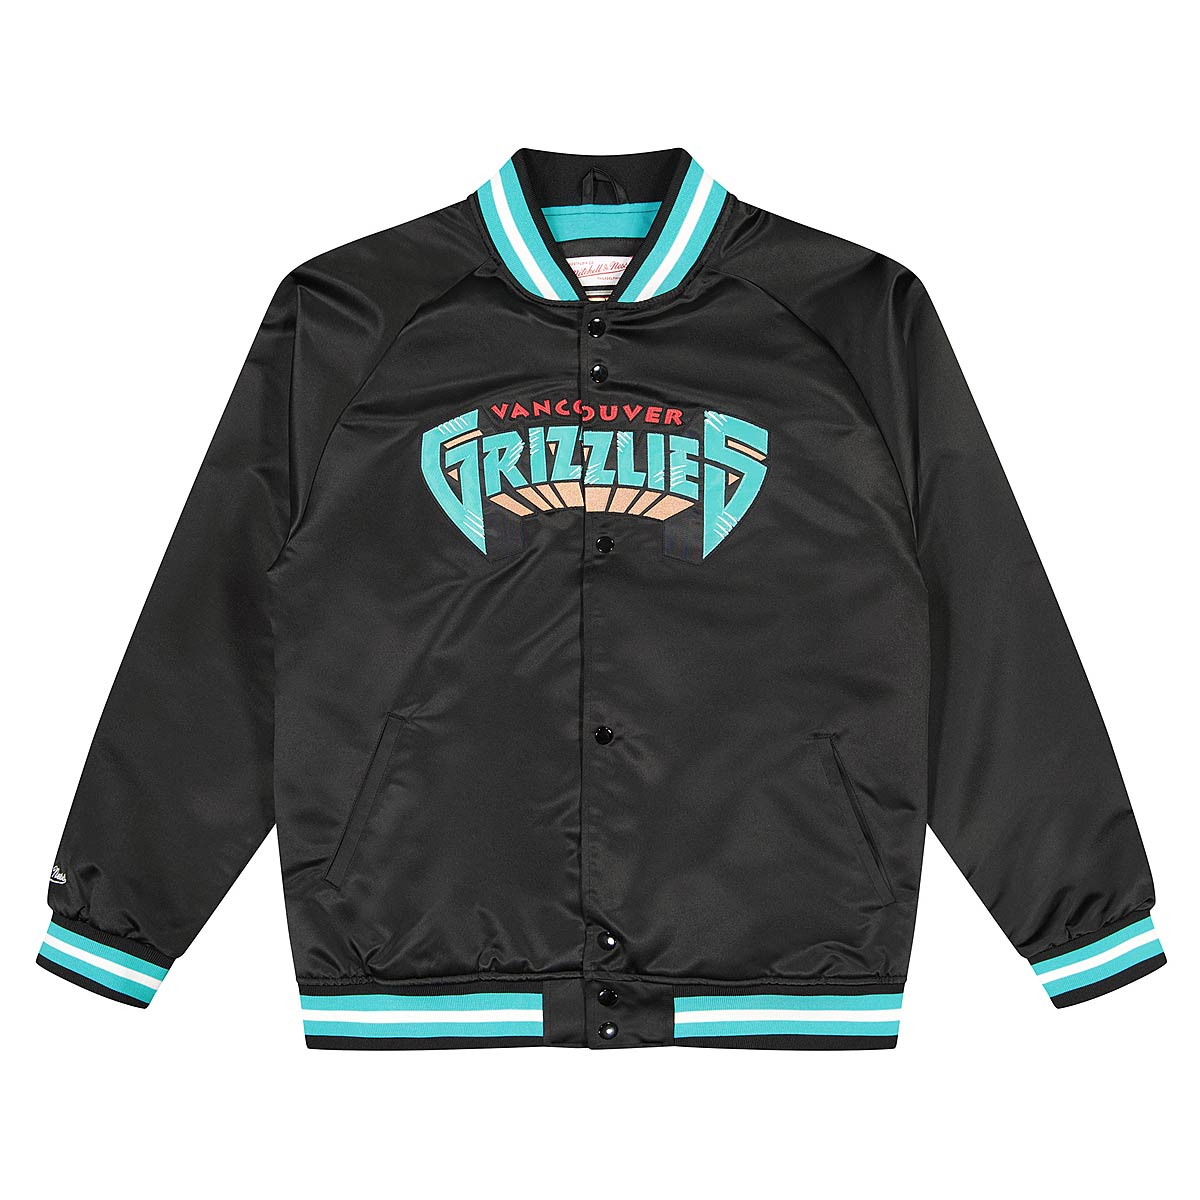 Vancouver-grizzlies Starter-jacket / Vintage NBA Basketball 